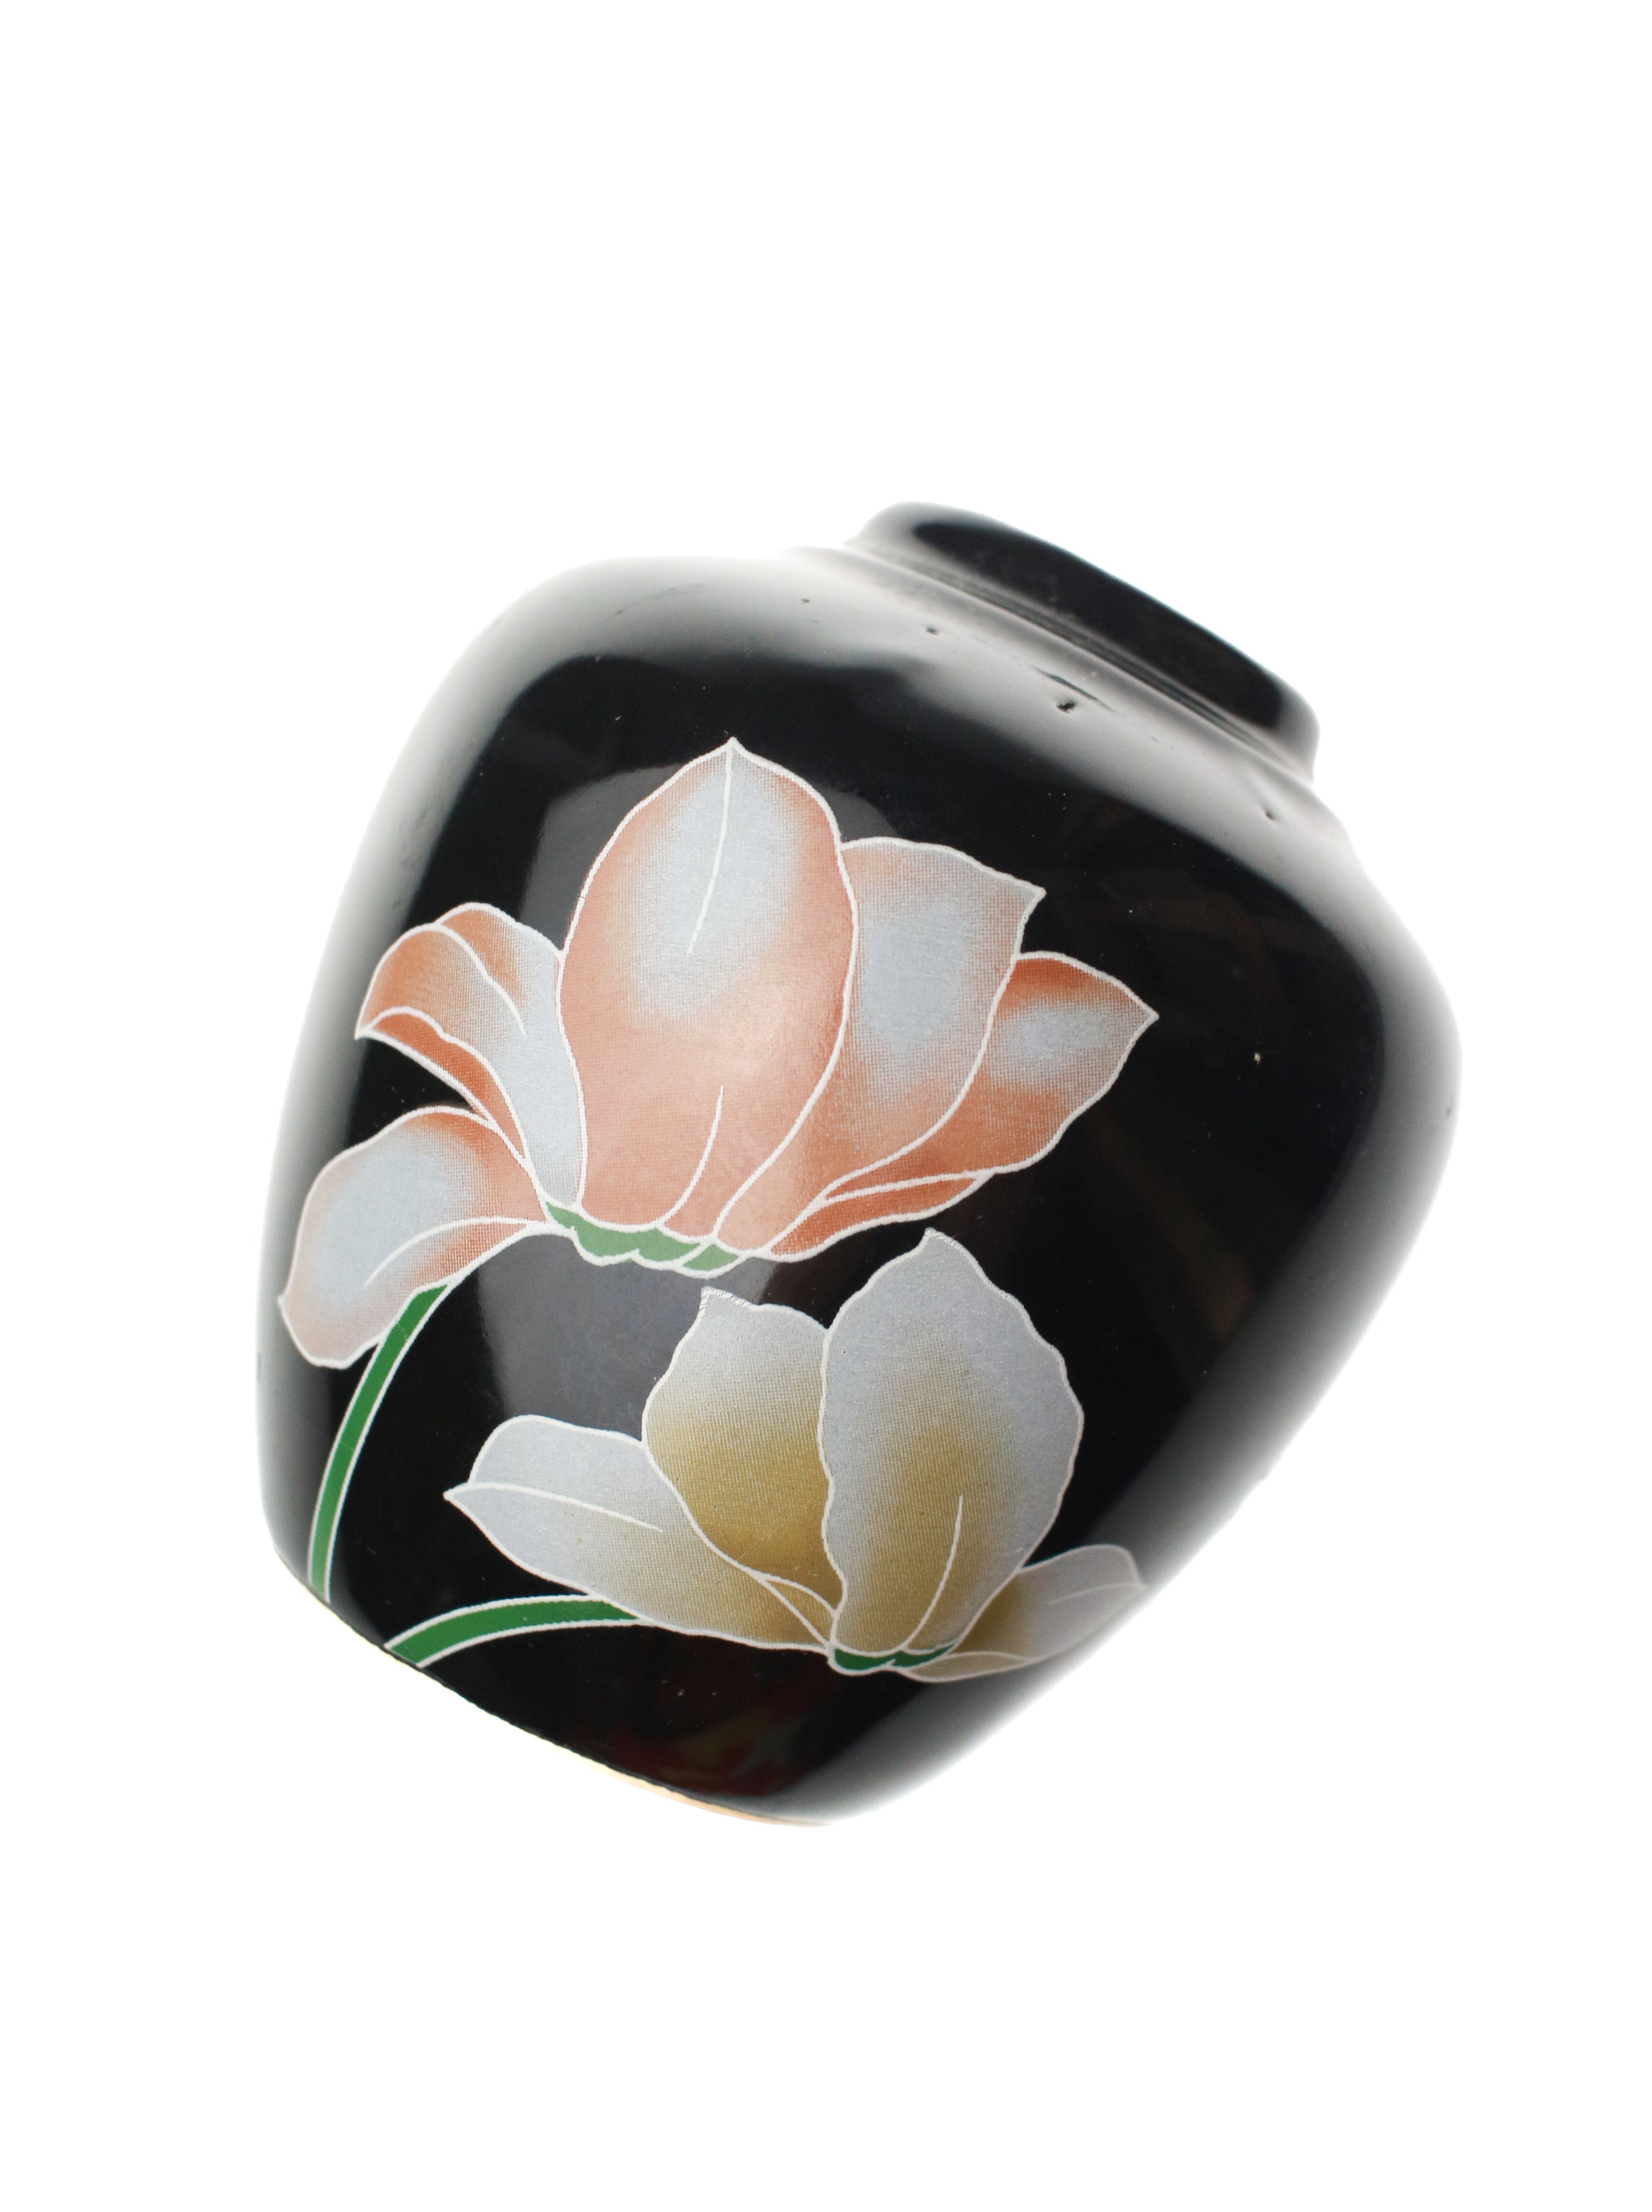 Black Oriental Vase